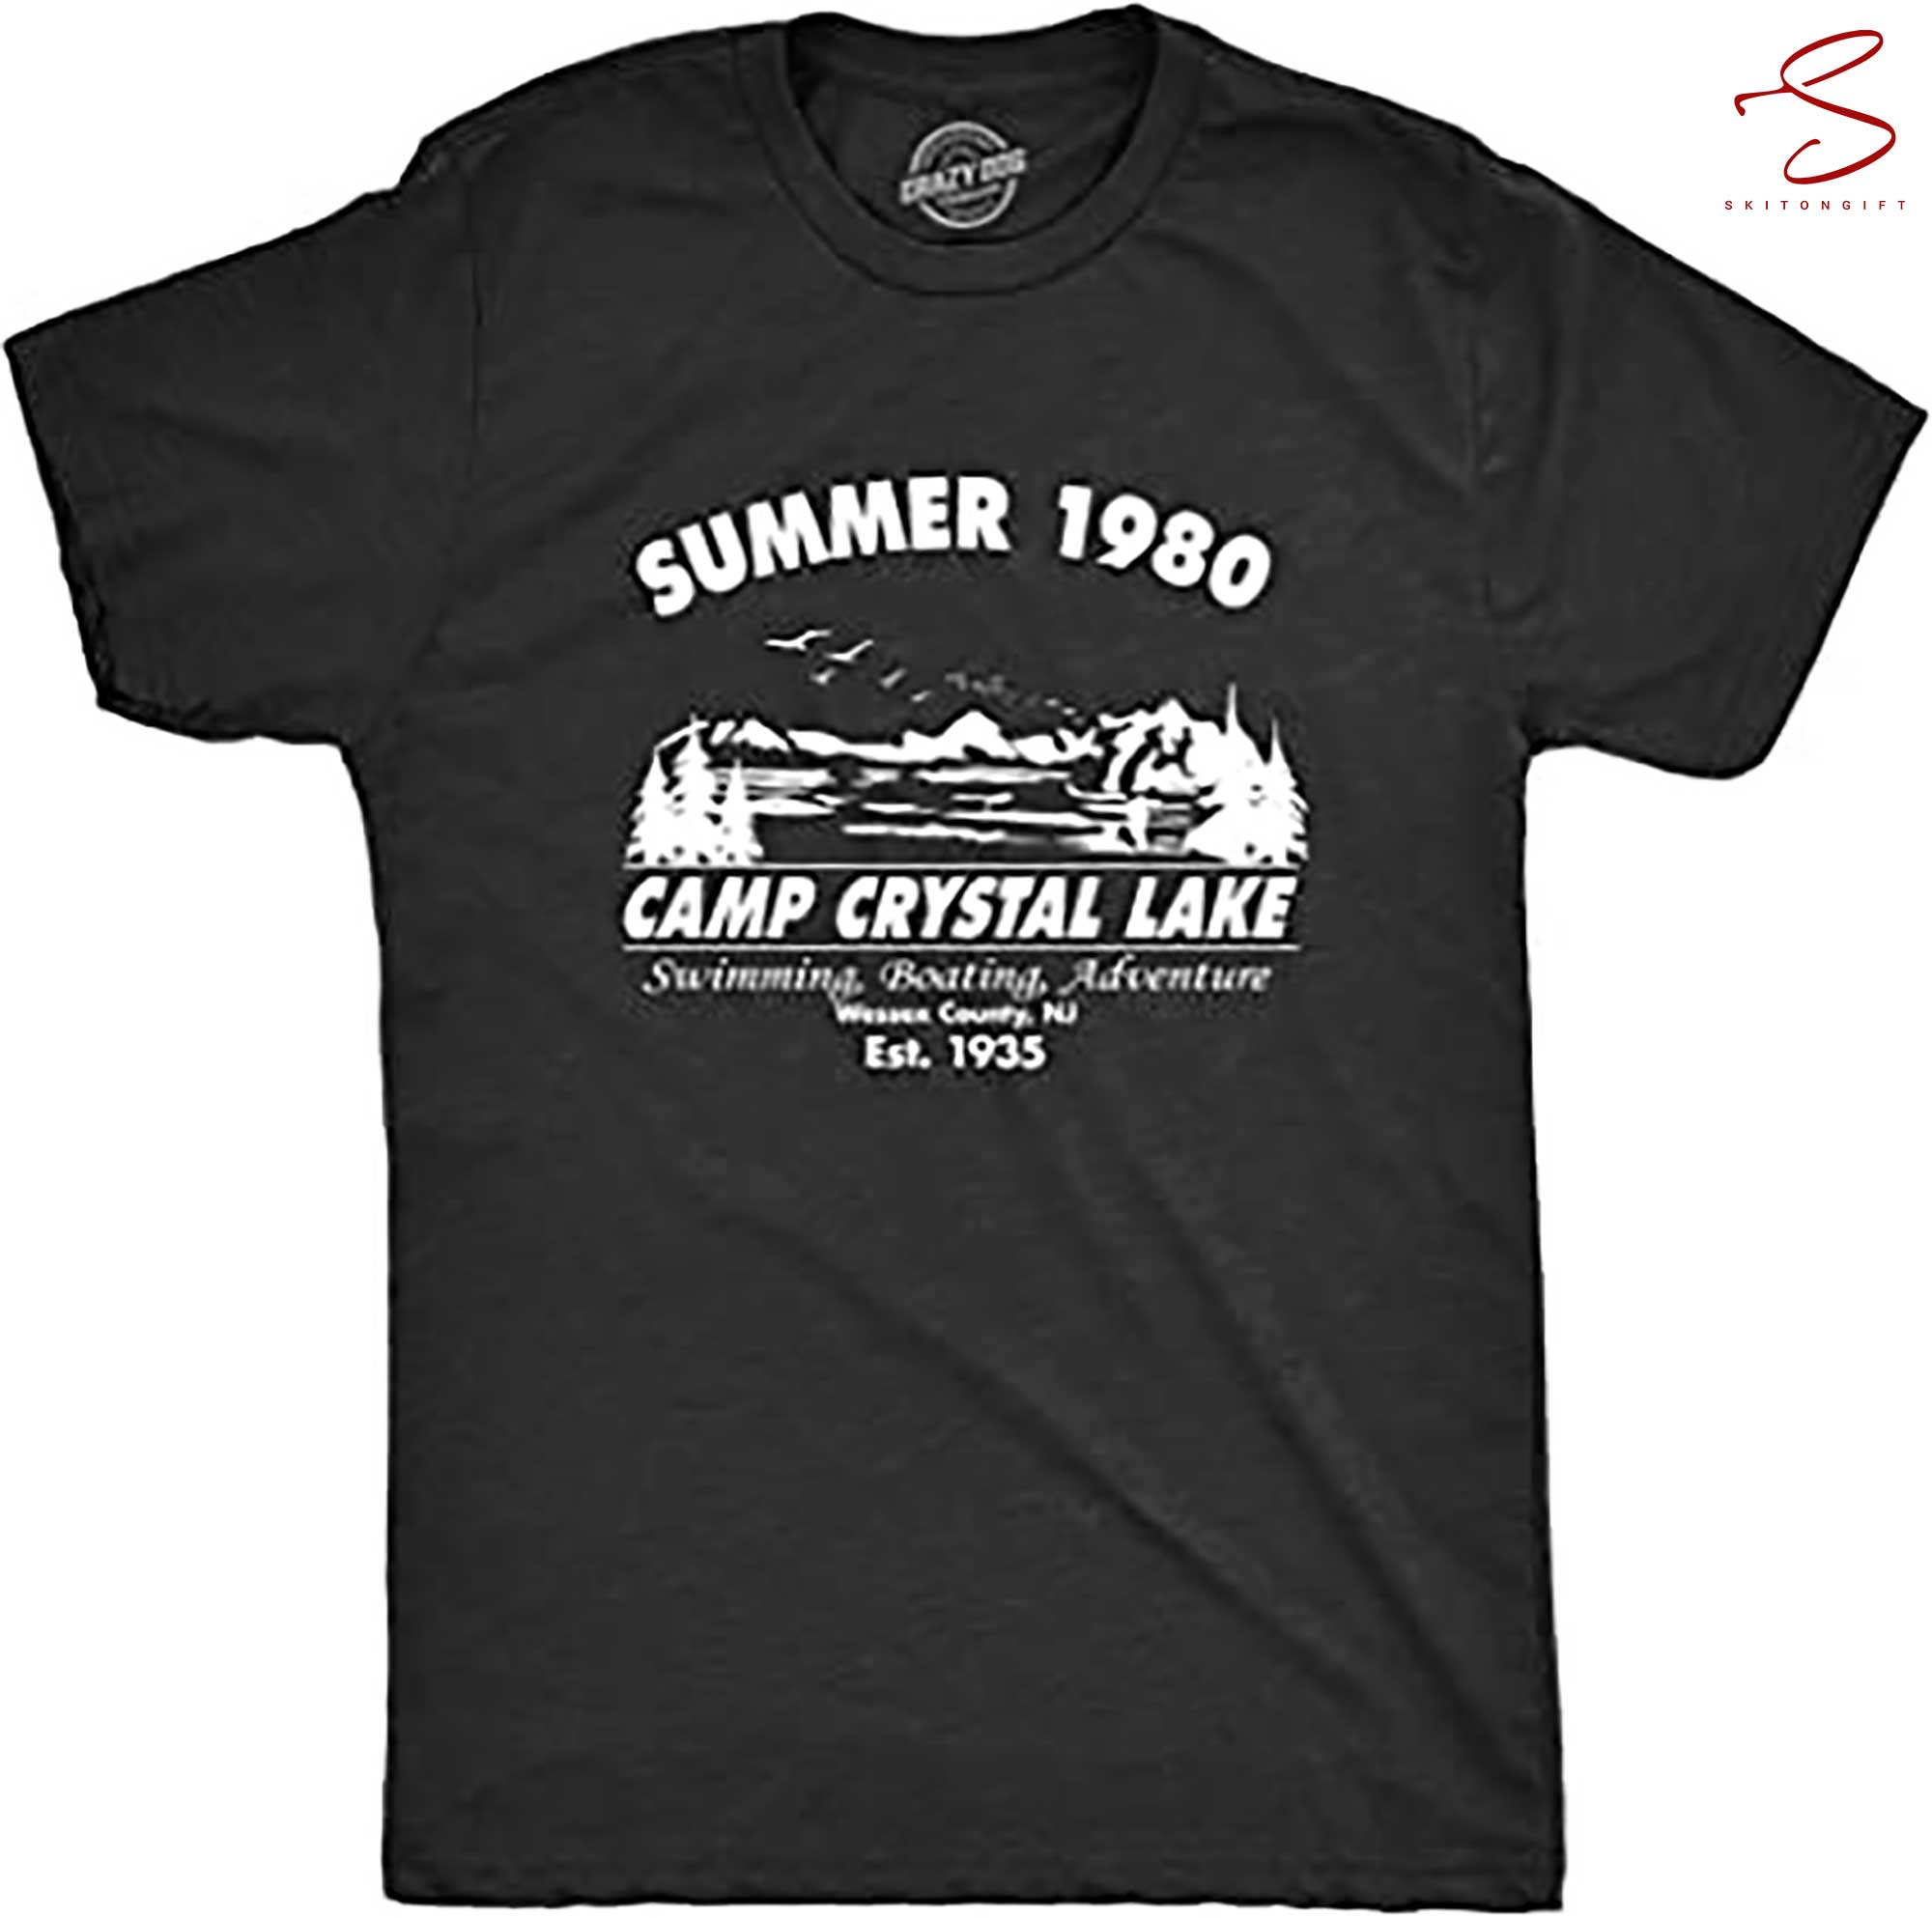 Skitongift Summer 1980 Men Funny T Shirt Graphic Camping Vintage Cool 80s Novelty Tees